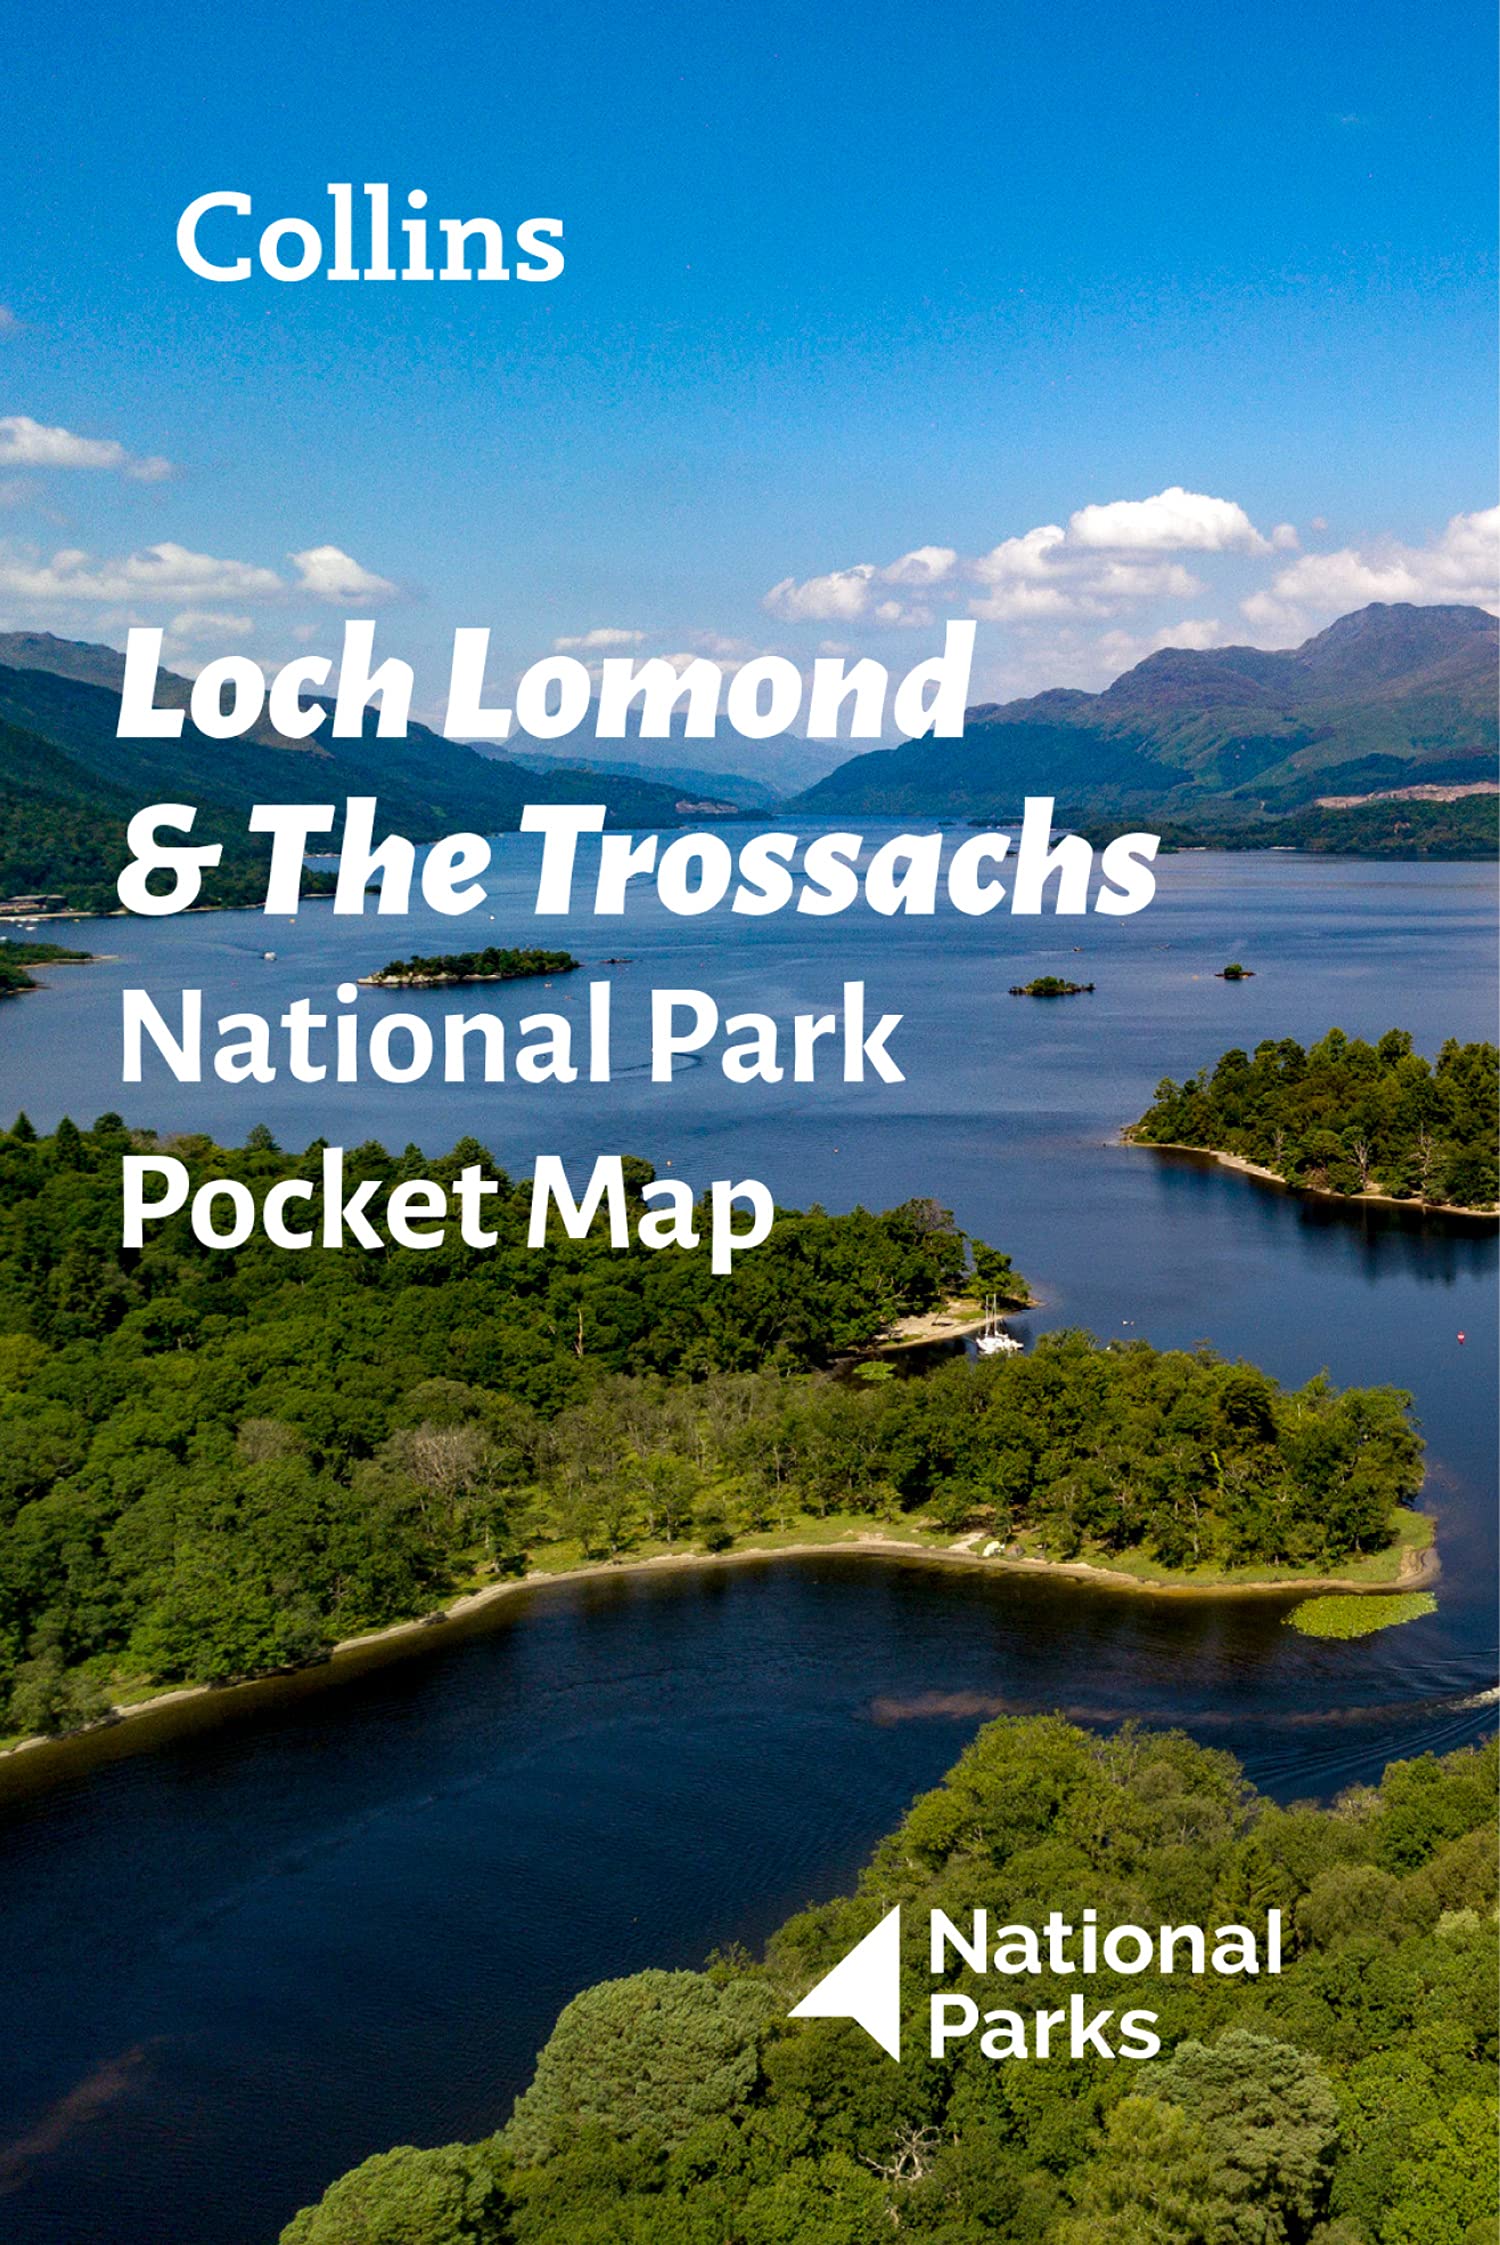 Loch Lomond & The Trossachs National Park Pocket Map by penny black